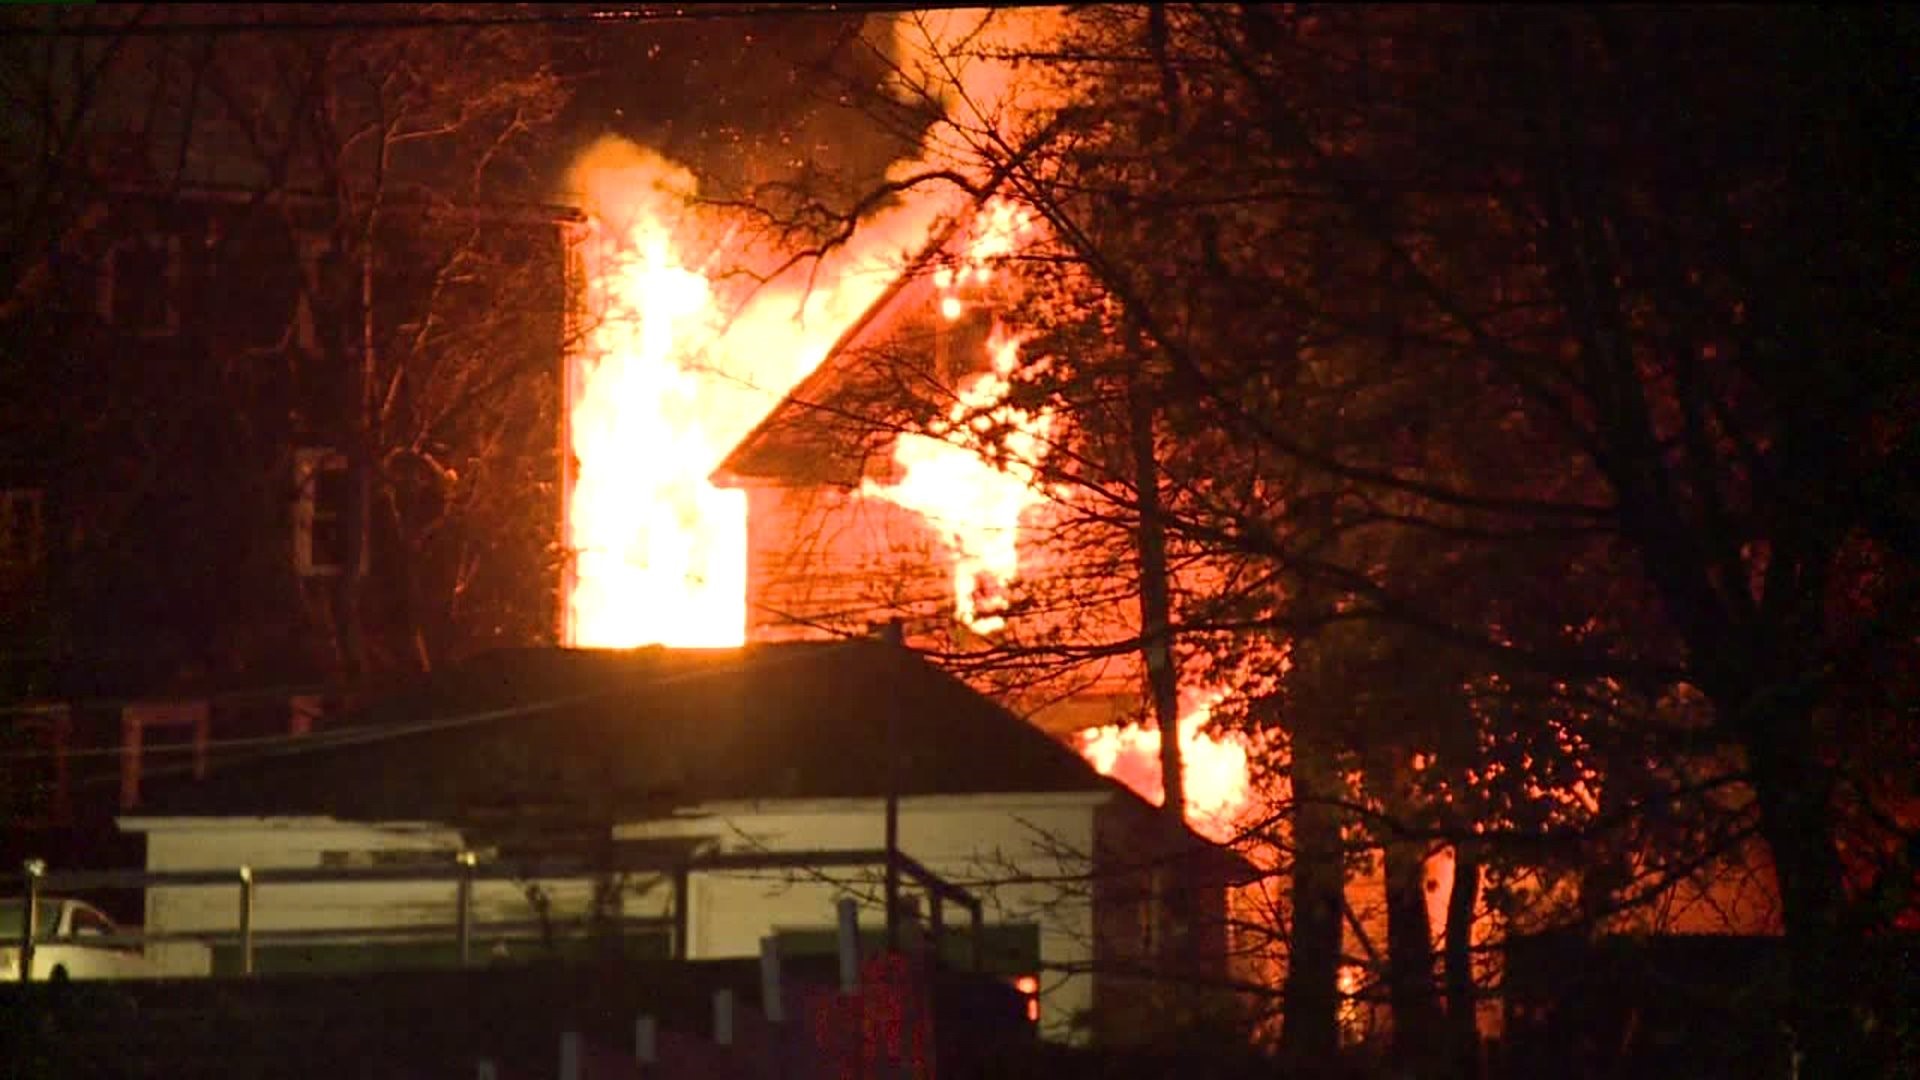 Fire Destroys Two Houses in Scranton, Investigation Underway